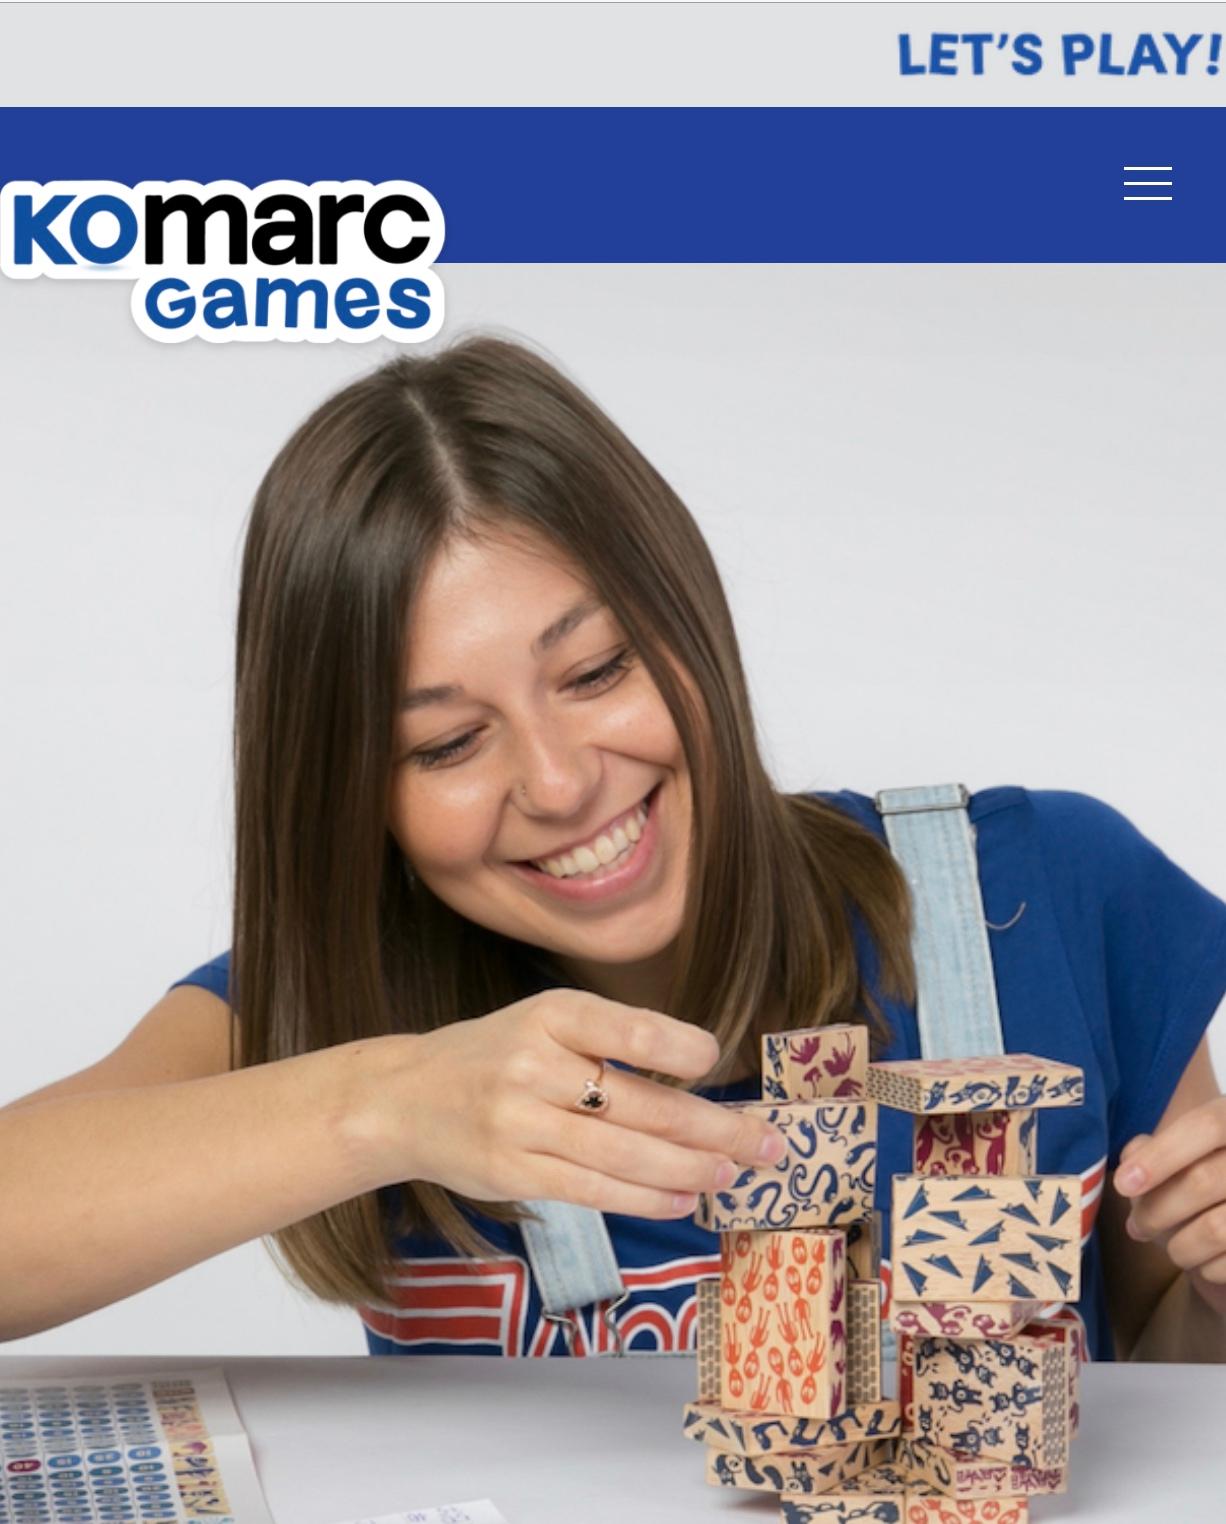 Komarc Games Viet Nam